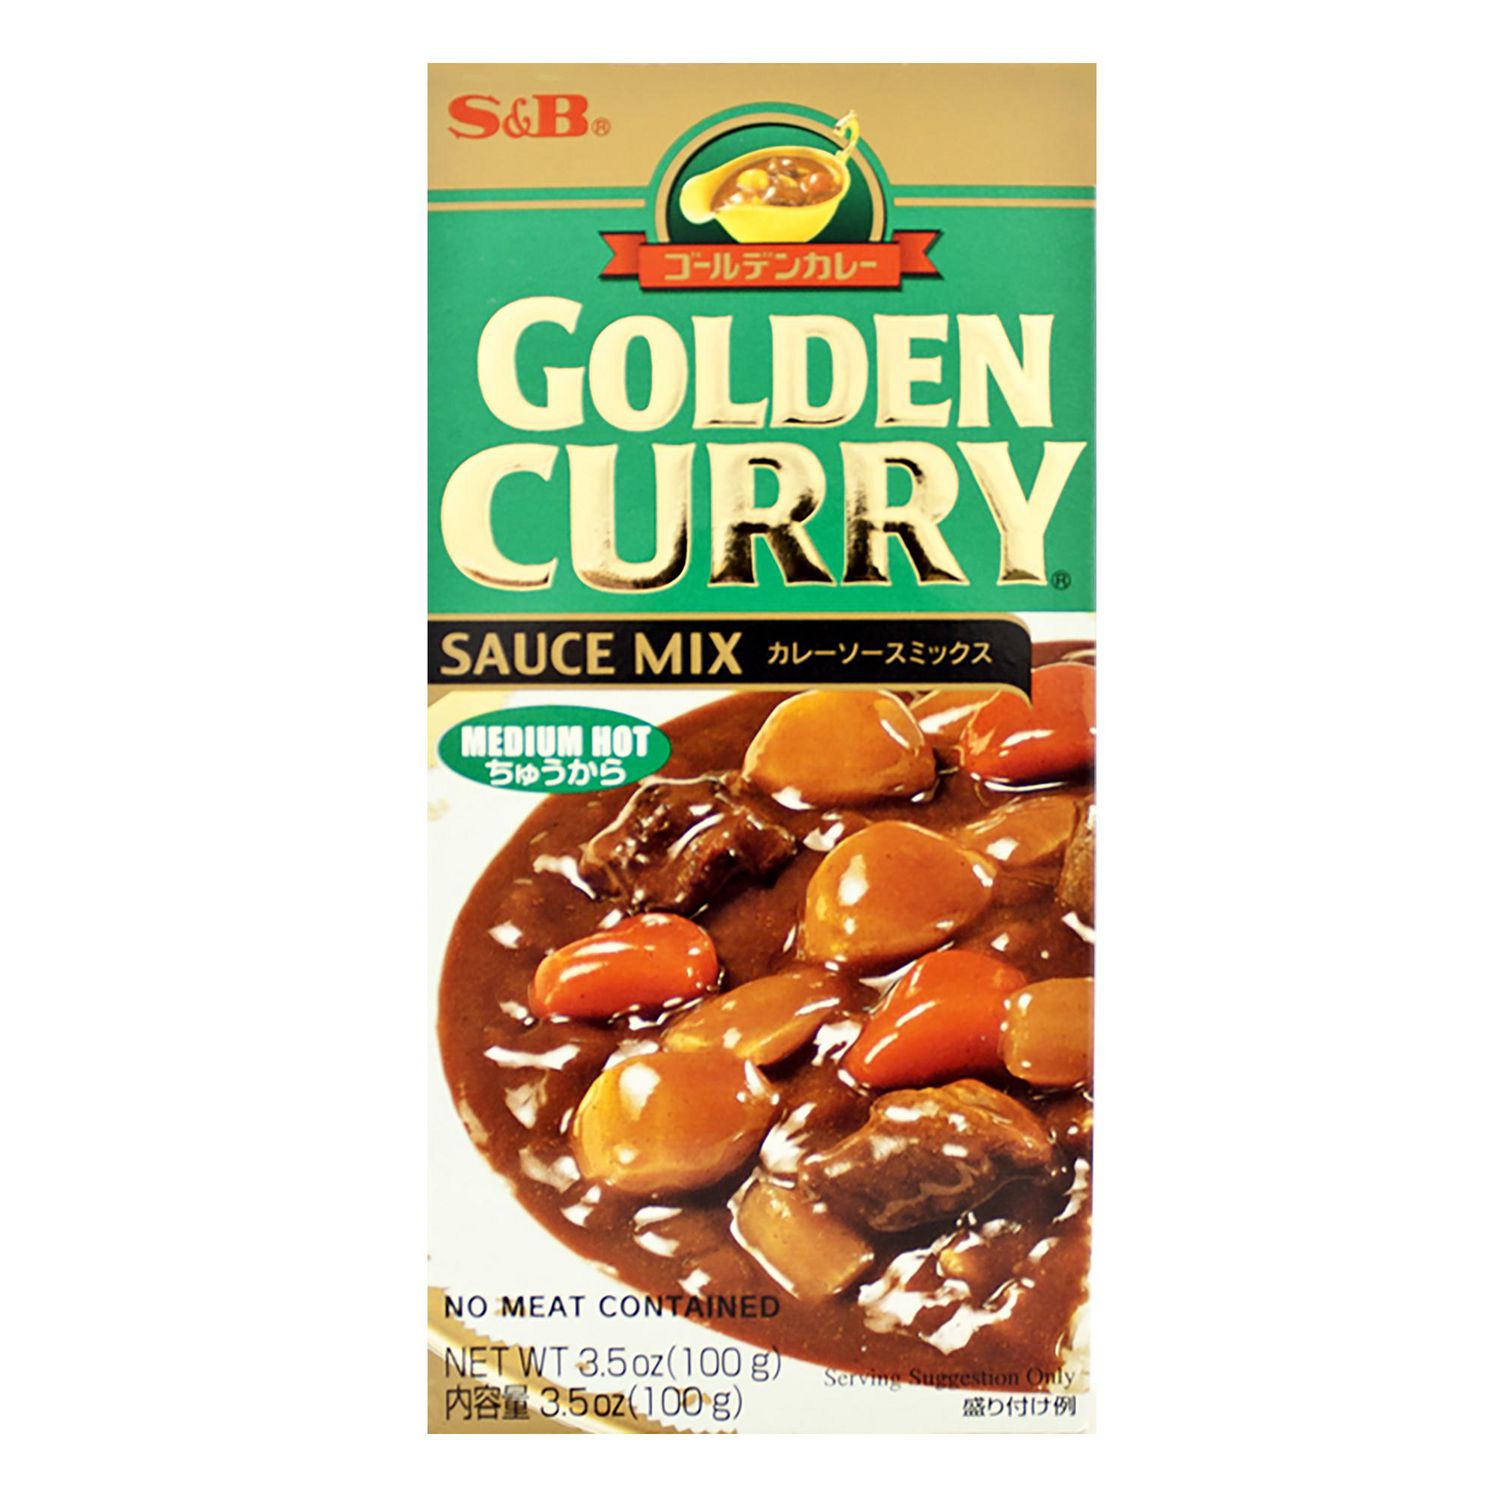 S&amp;B Golden Curry Medium Hot Sauce Mix | Walmart Canada